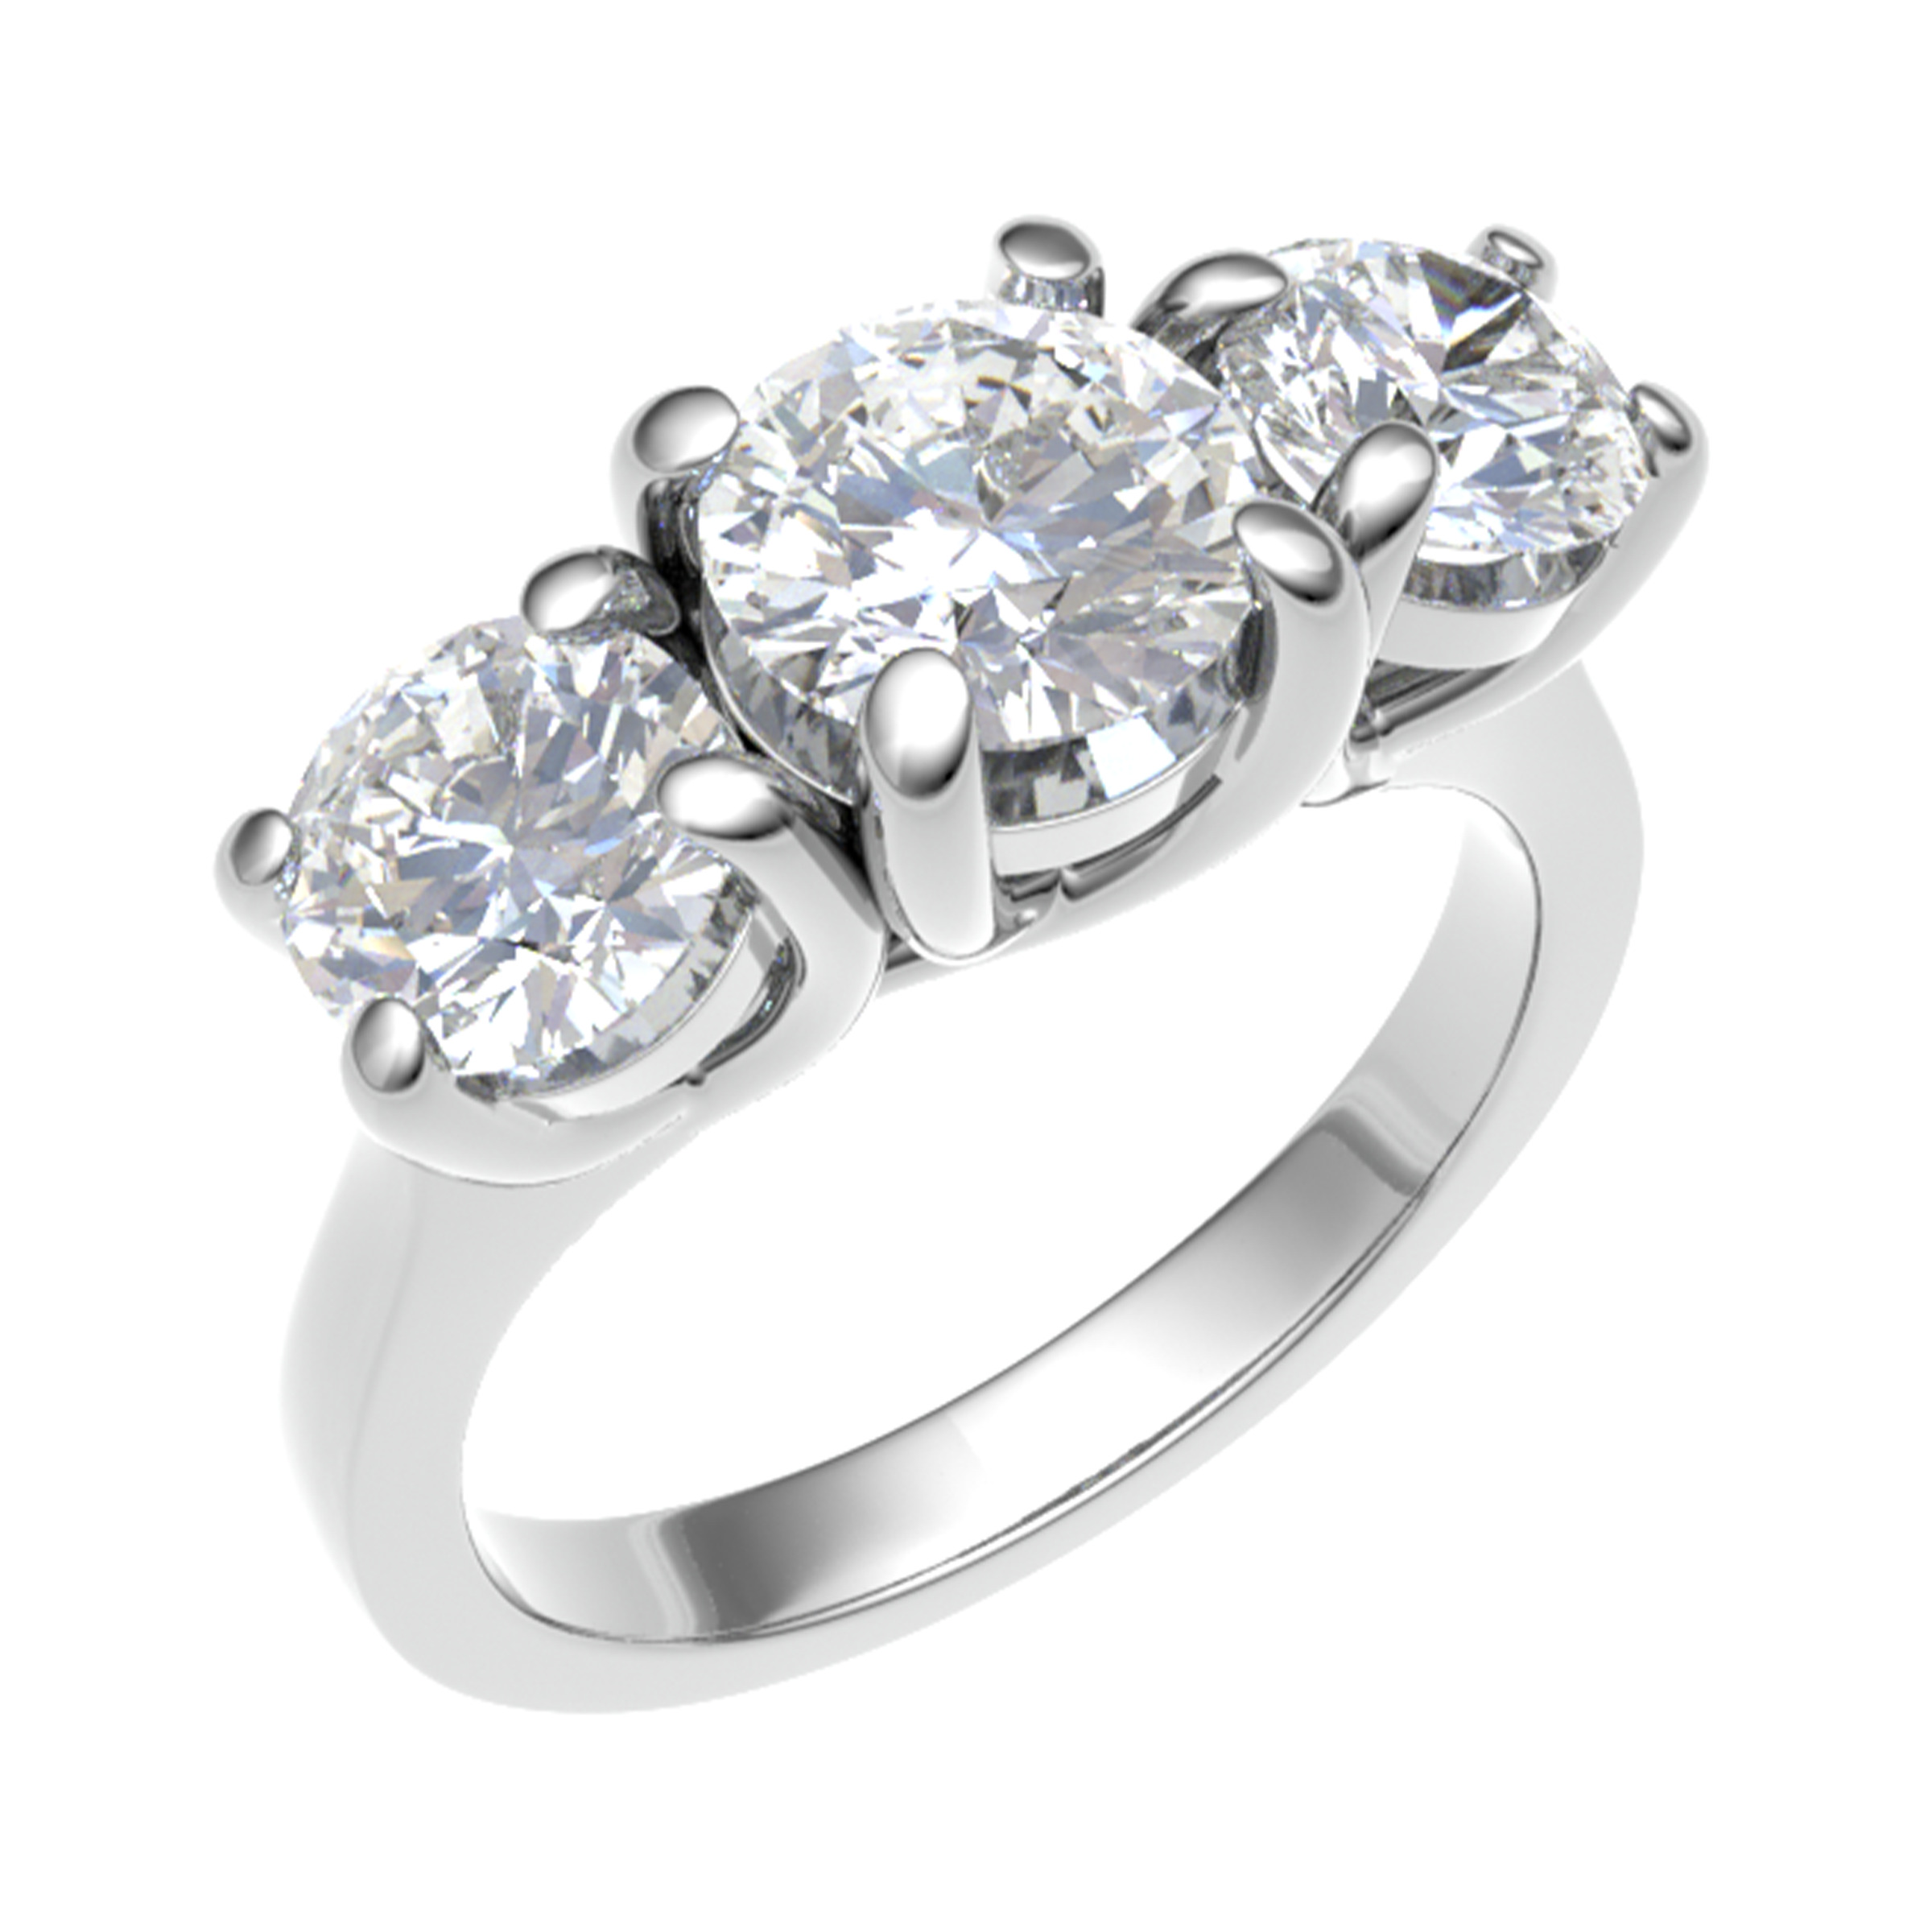 0.20 - 2.00 Carat Lab-Created 3 Stone Diamond Rings